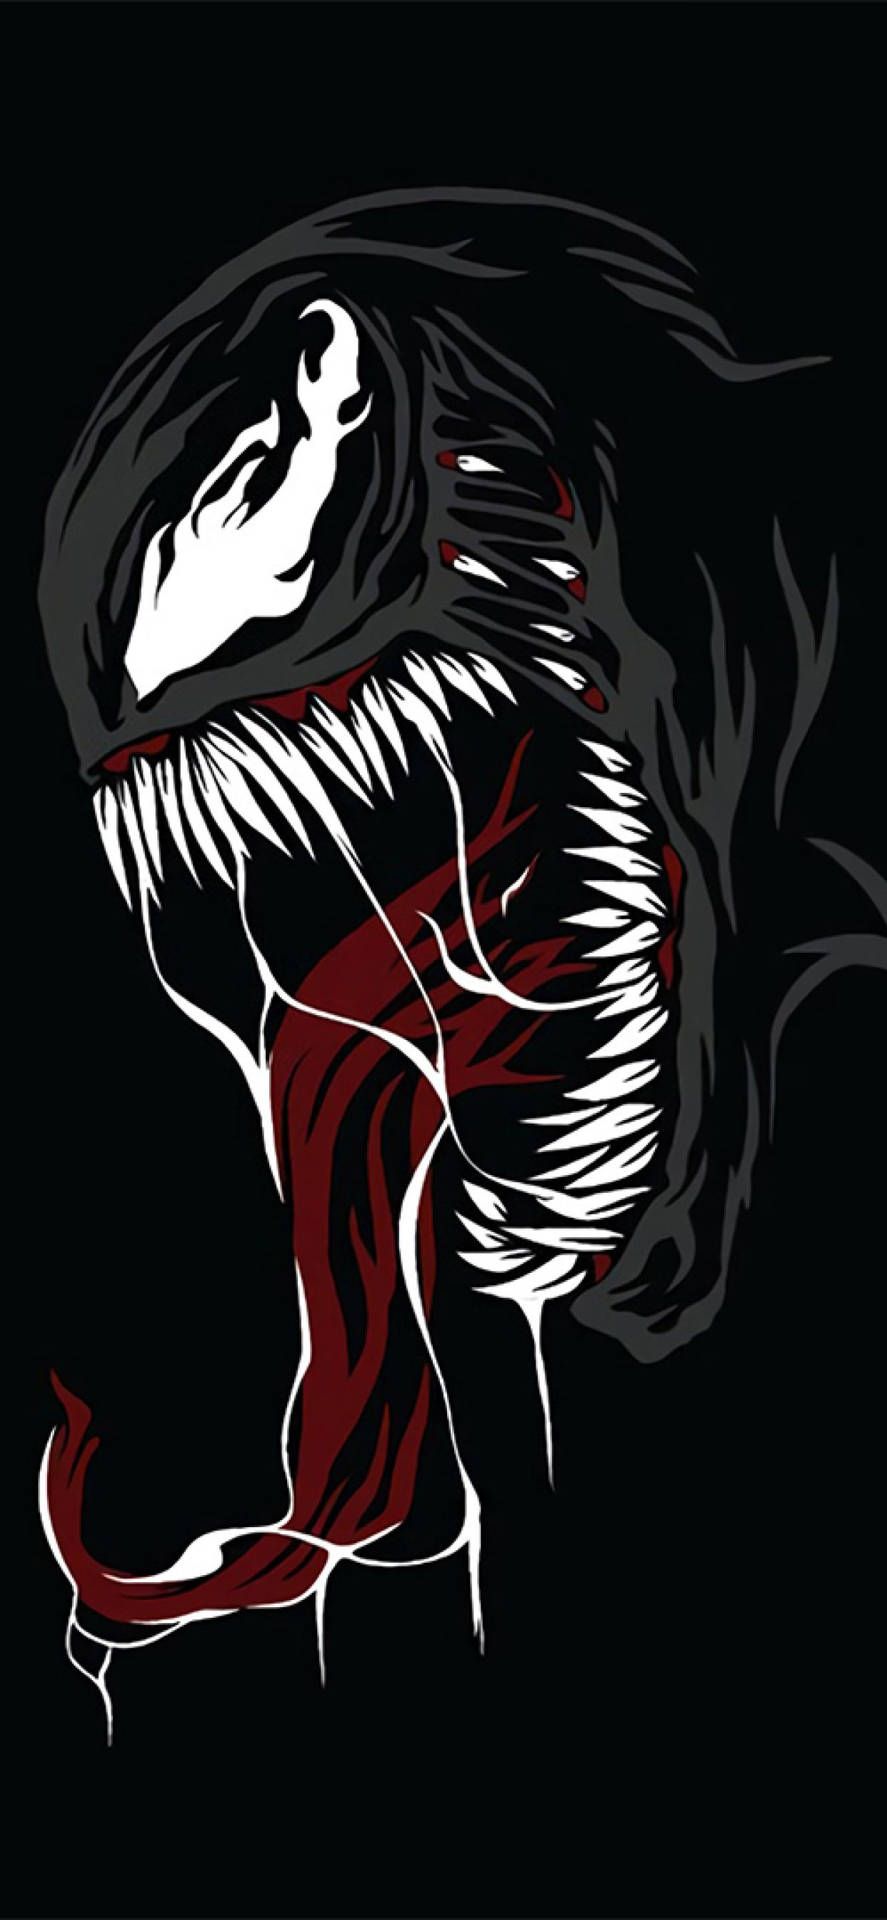  Venom Hintergrundbild 887x1920. Download Caption: Minimalist Venom Art Design for iPhone Wallpaper